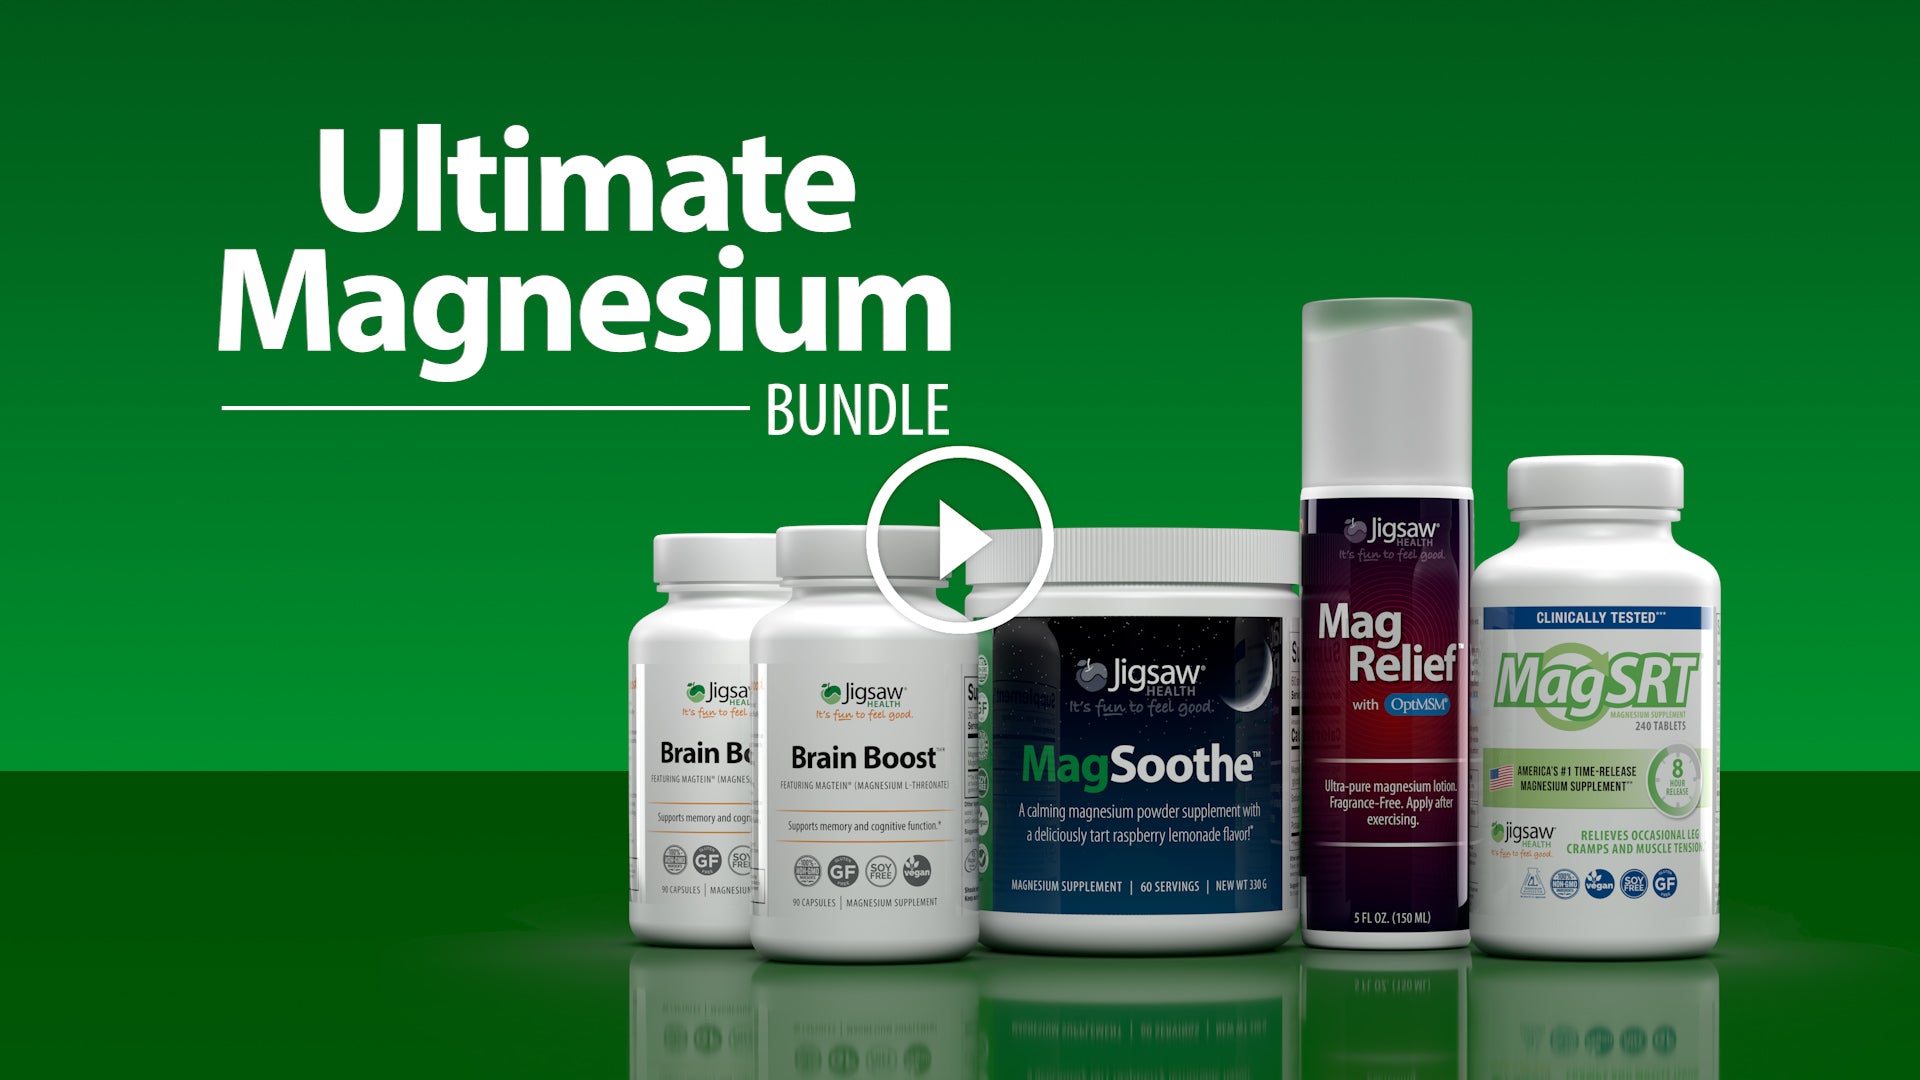 The Ultimate Magnesium Bundle (Video)